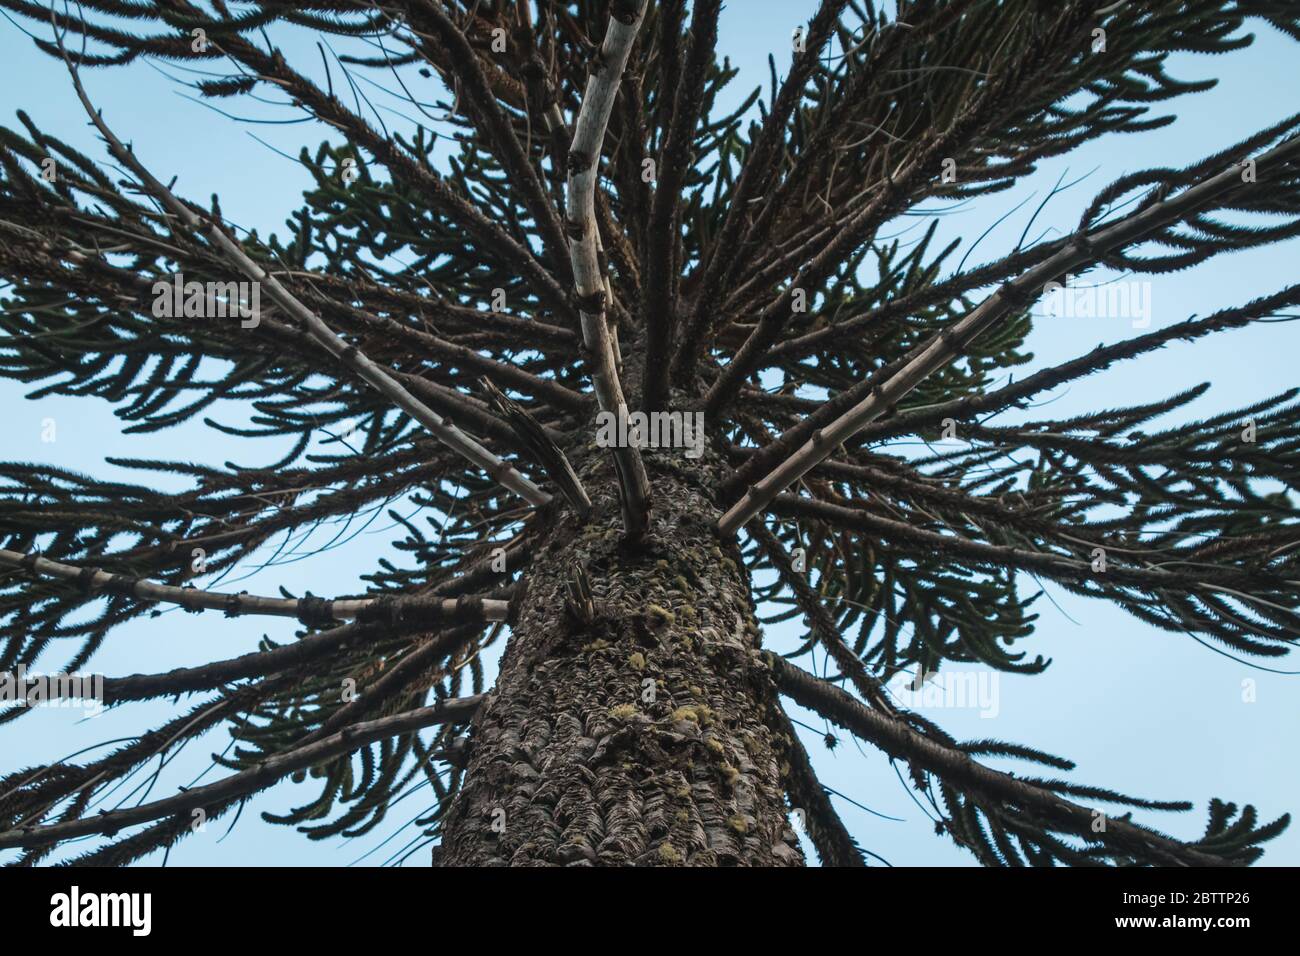 Araucarian Araucana, native tree in Chile Stock Photo